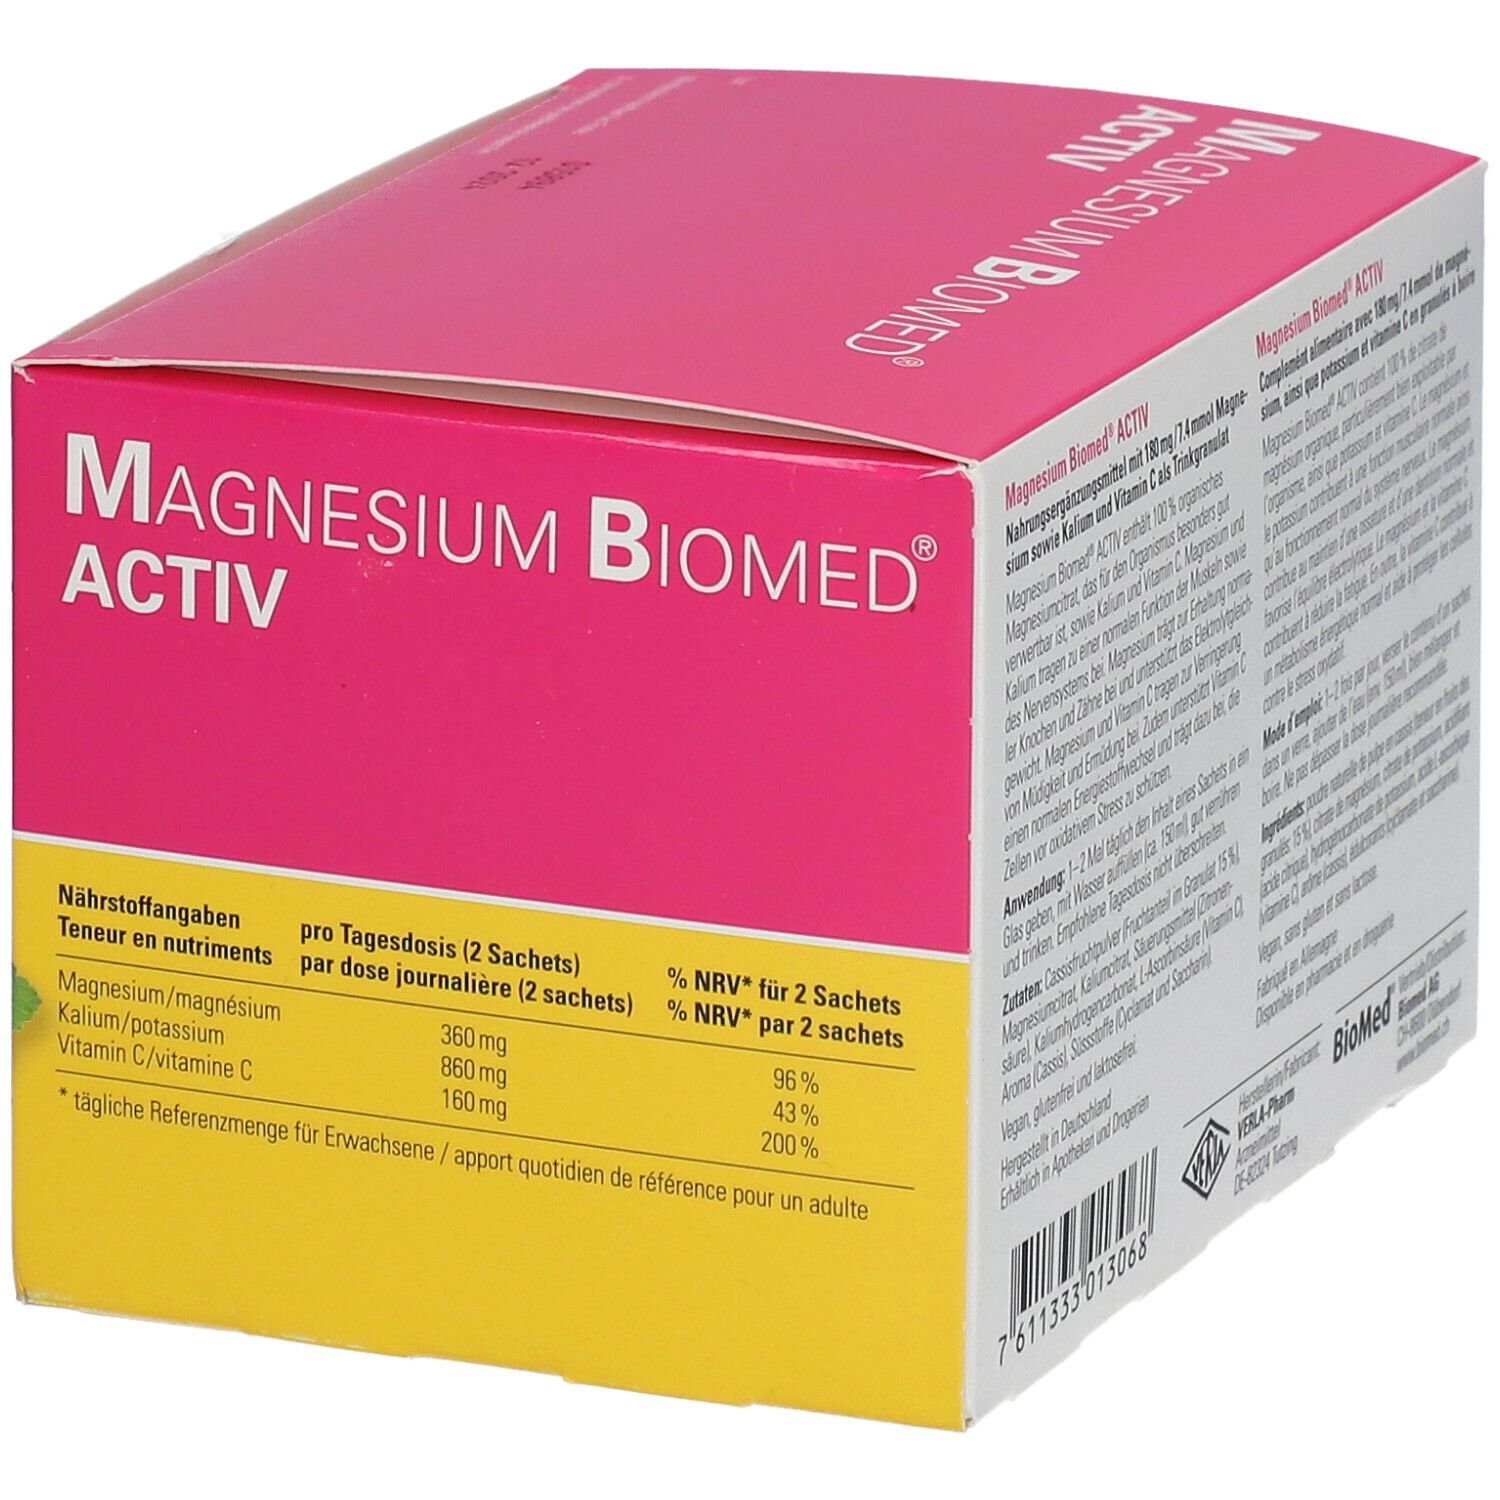 Magnésium Biomed® Activ